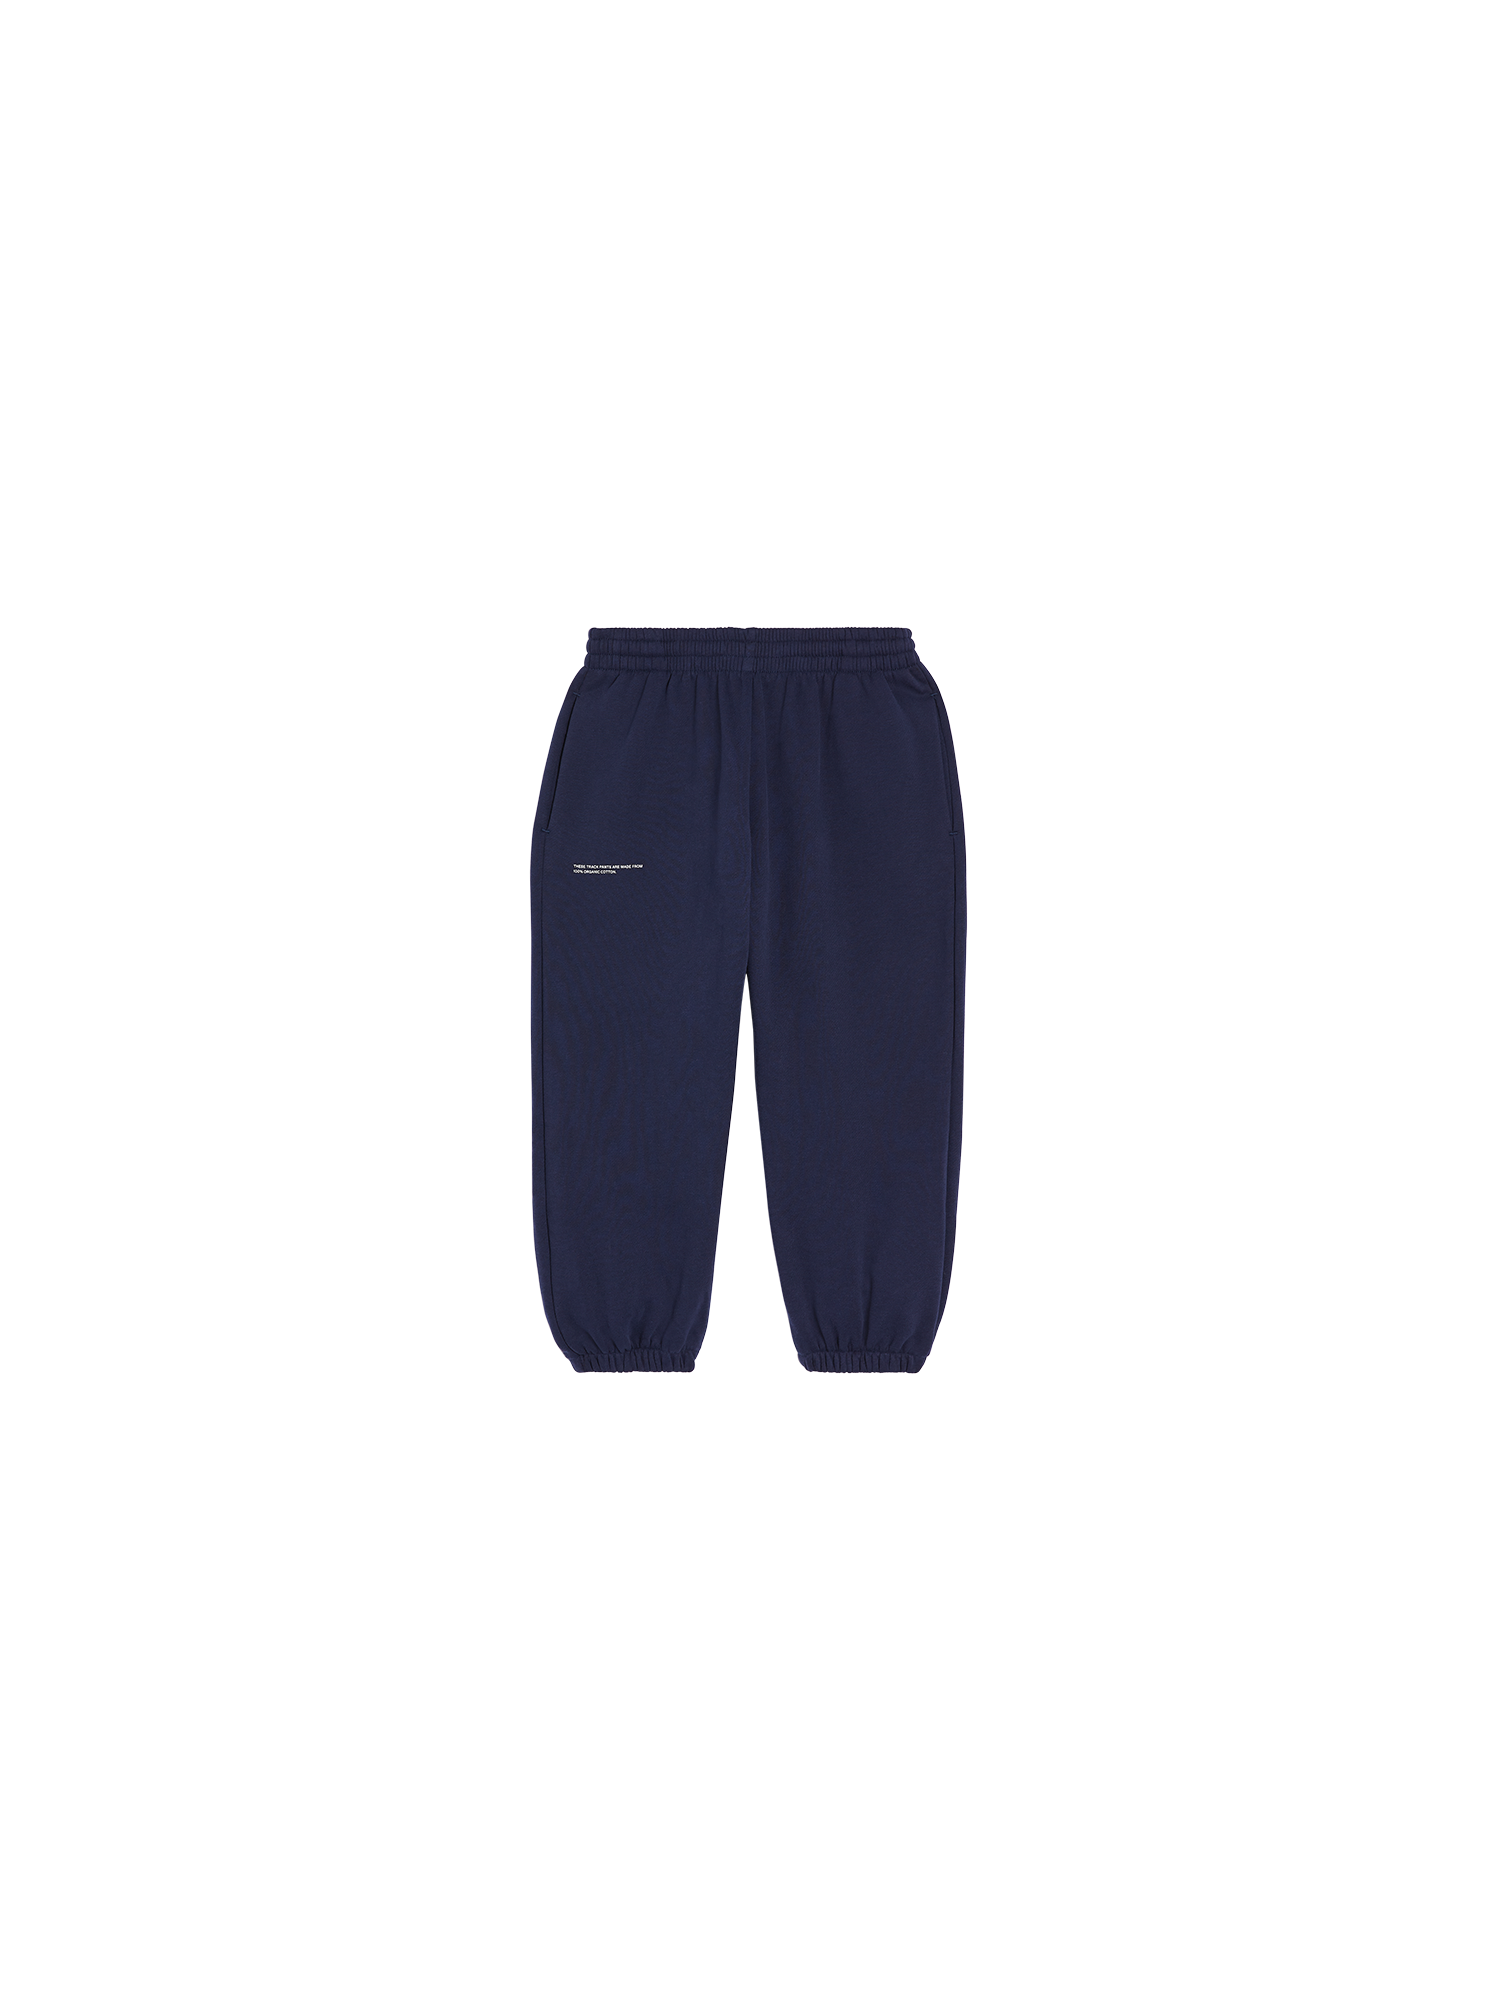 Kids' 365 Midweight Track Pants - Navy Blue - Pangaia